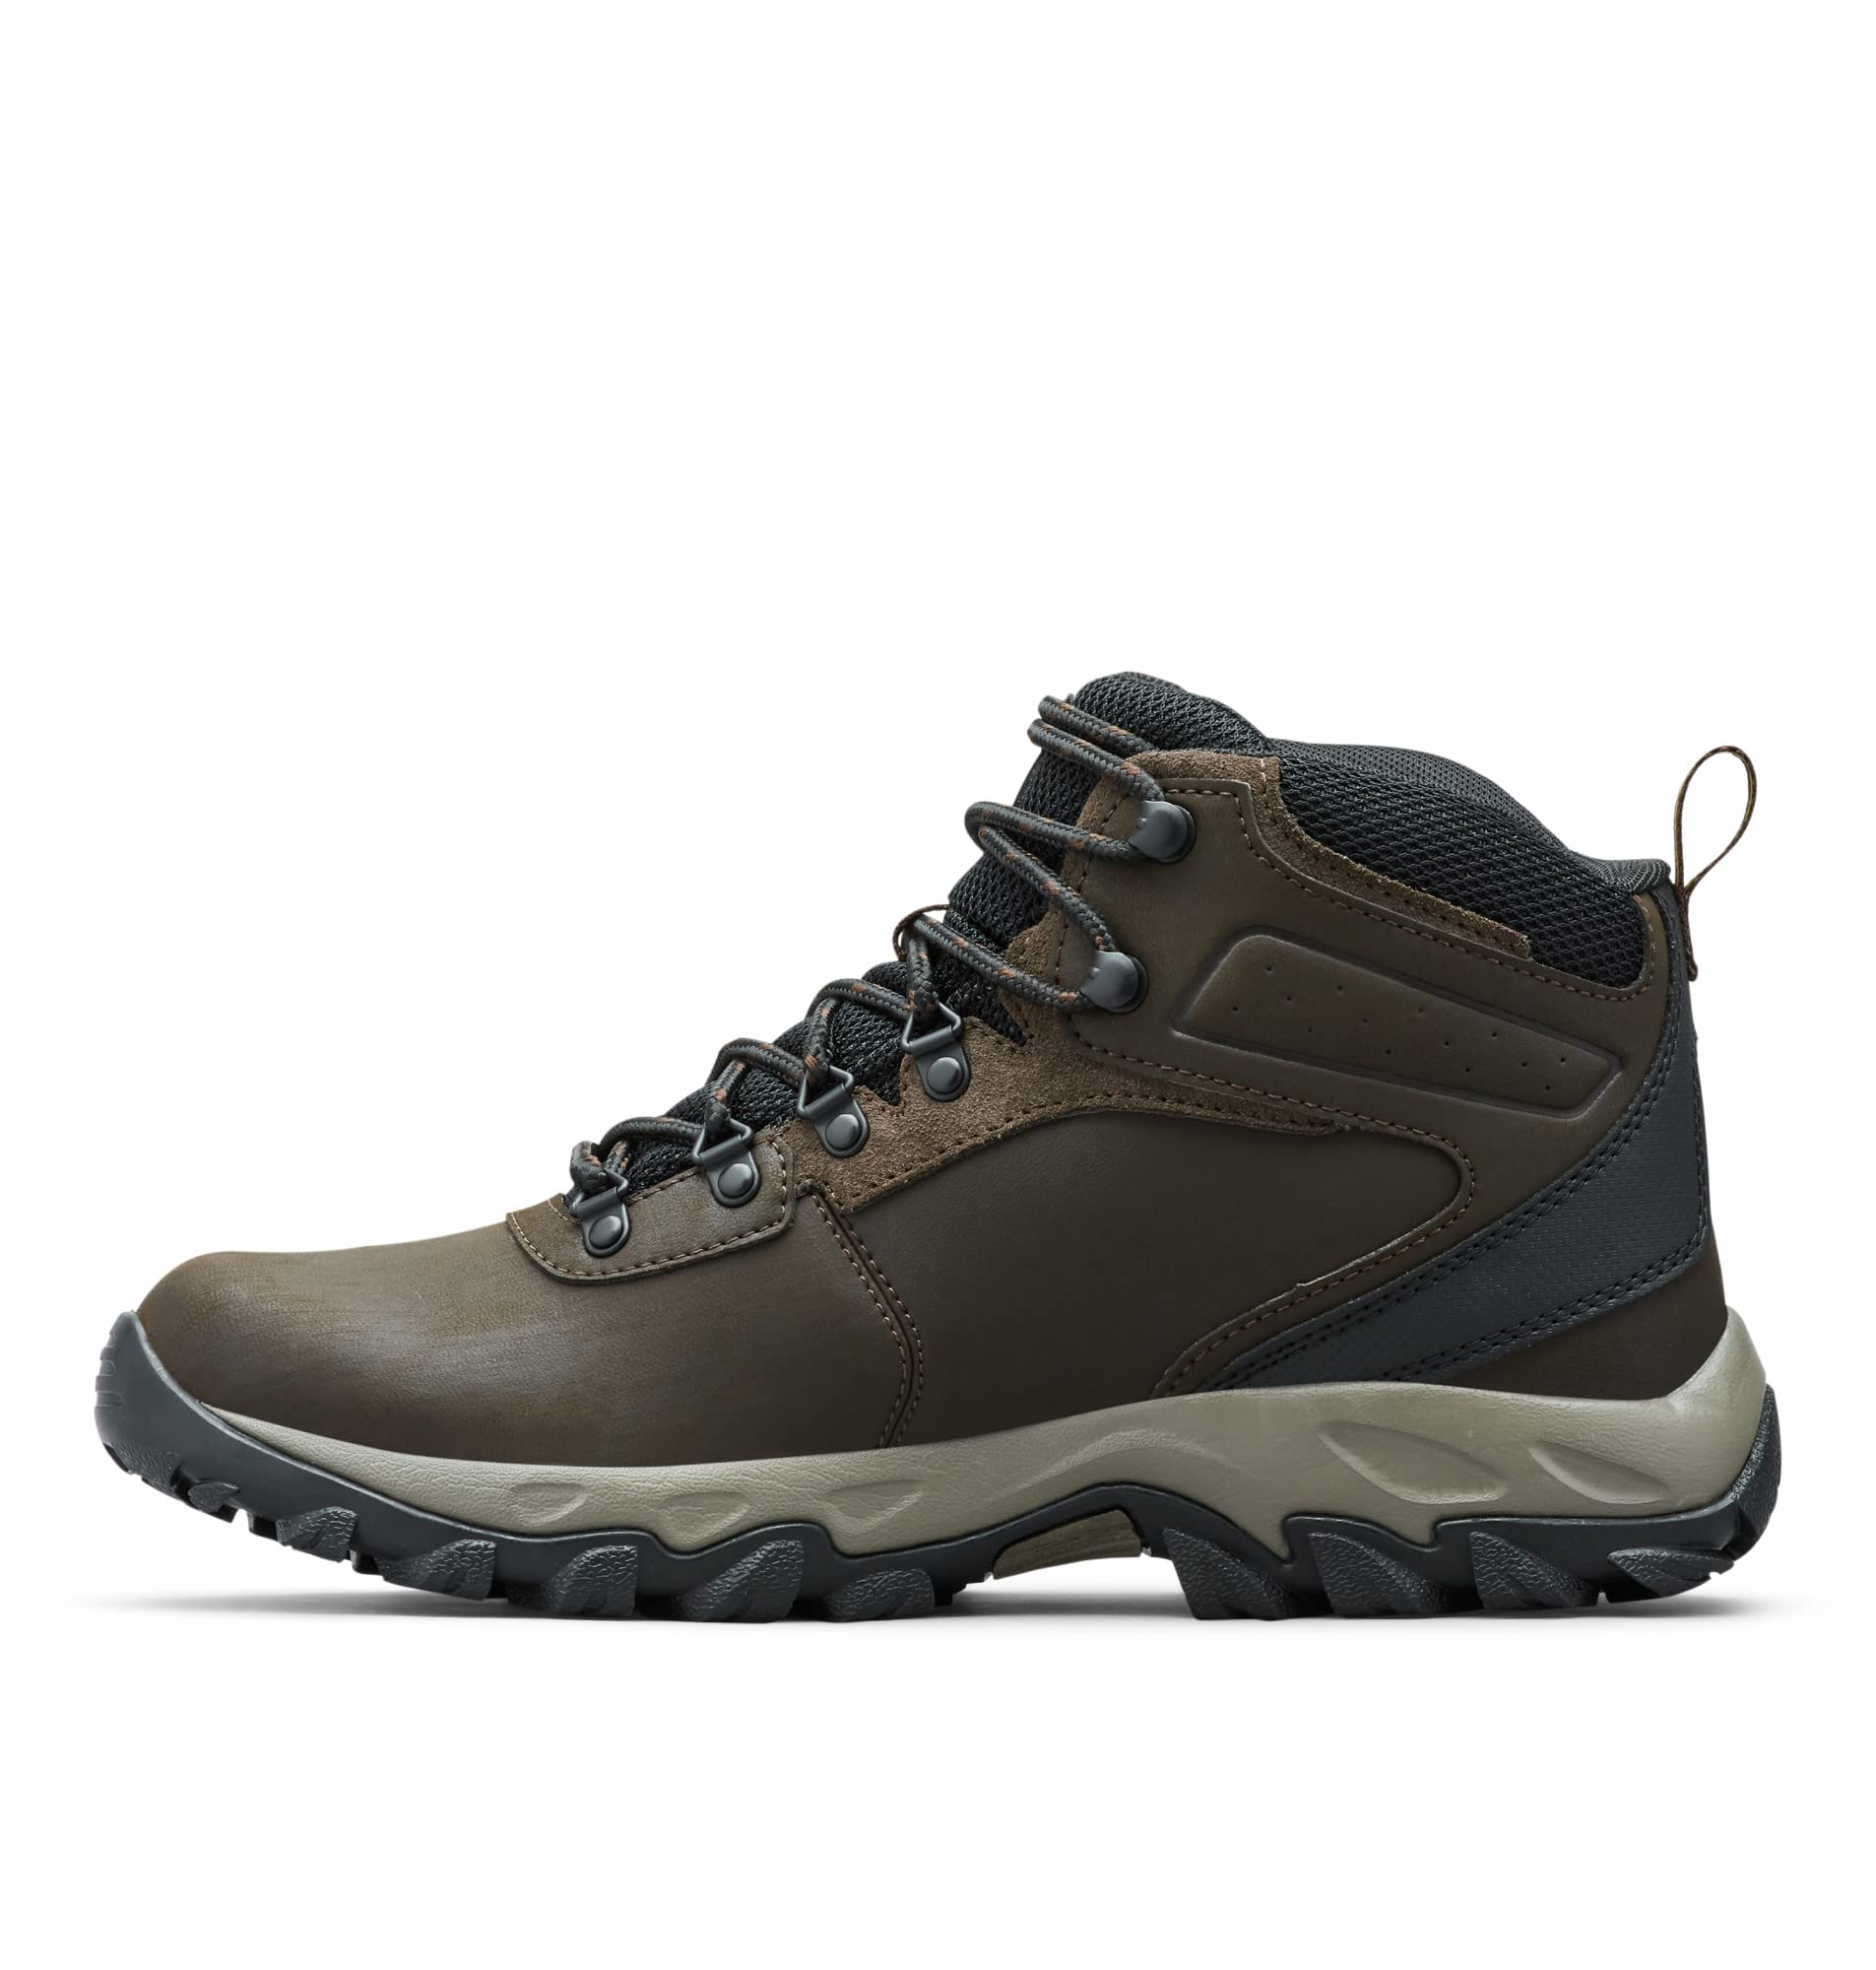 Columbia Men's Newton Ridge Plus Ii Suede Waterproof Hiking Boot